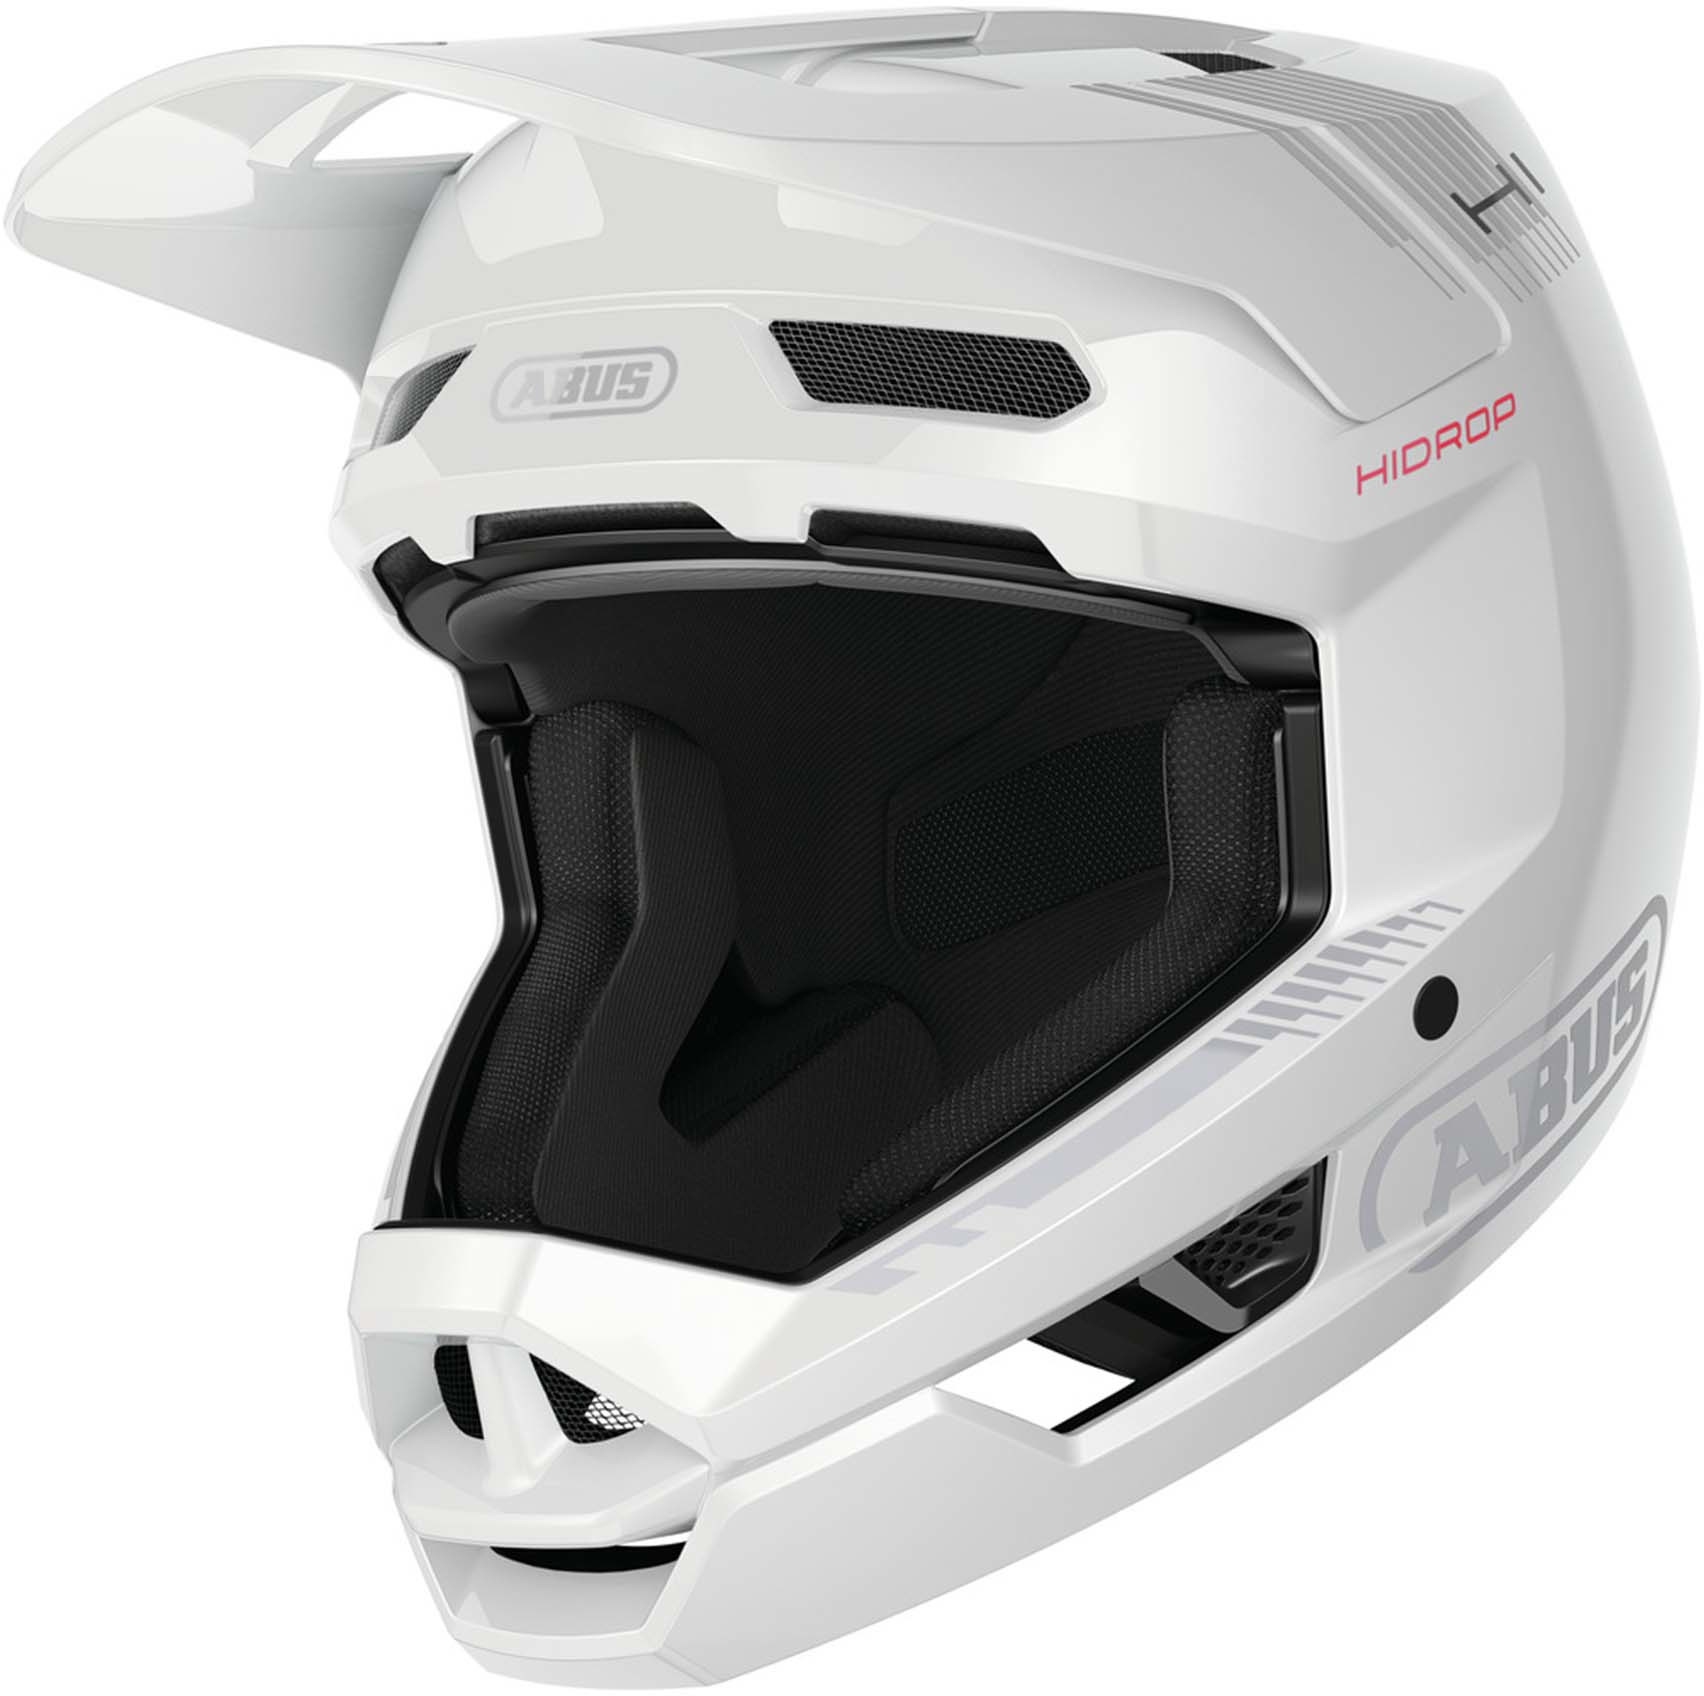 Productfoto van ABUS Hidrop Full Face Helm - shiny white